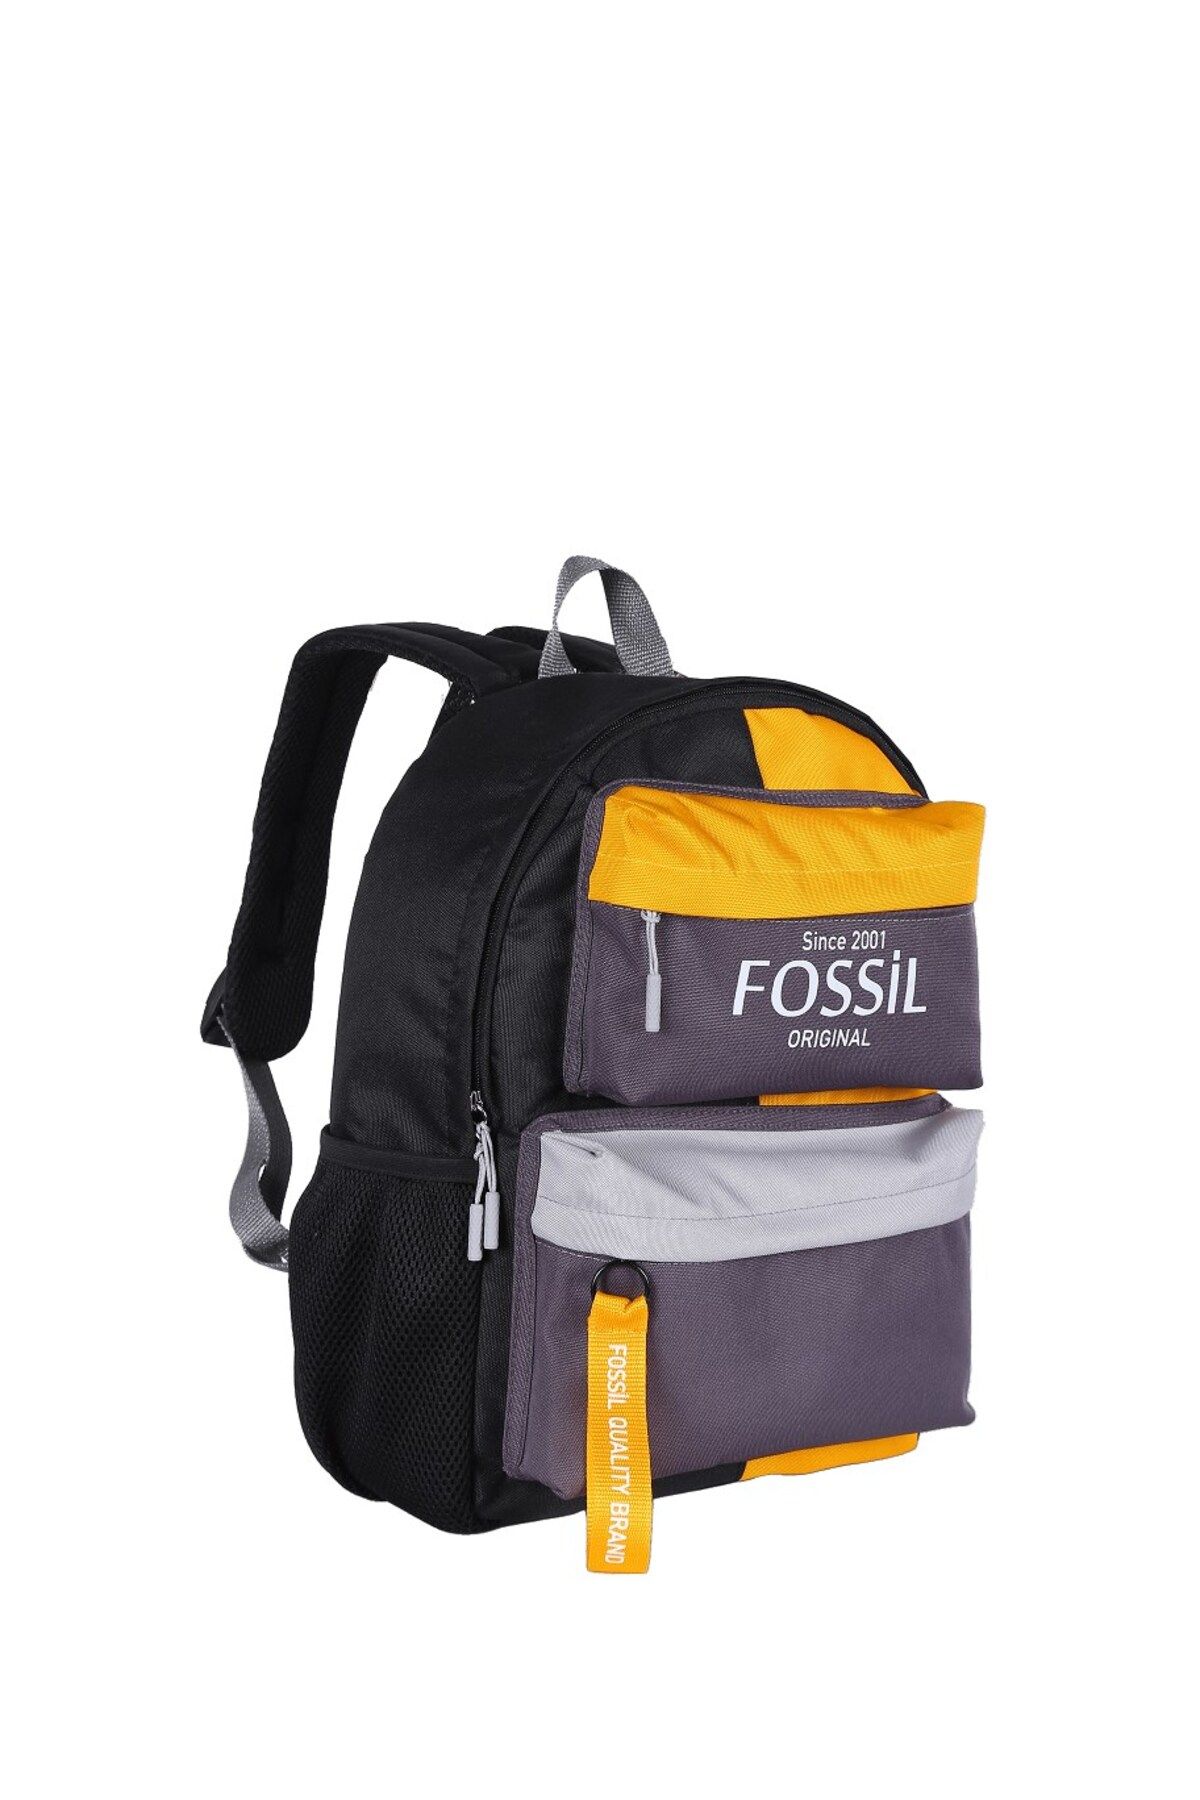 Fossil Okul Sırt Çantası- 9512